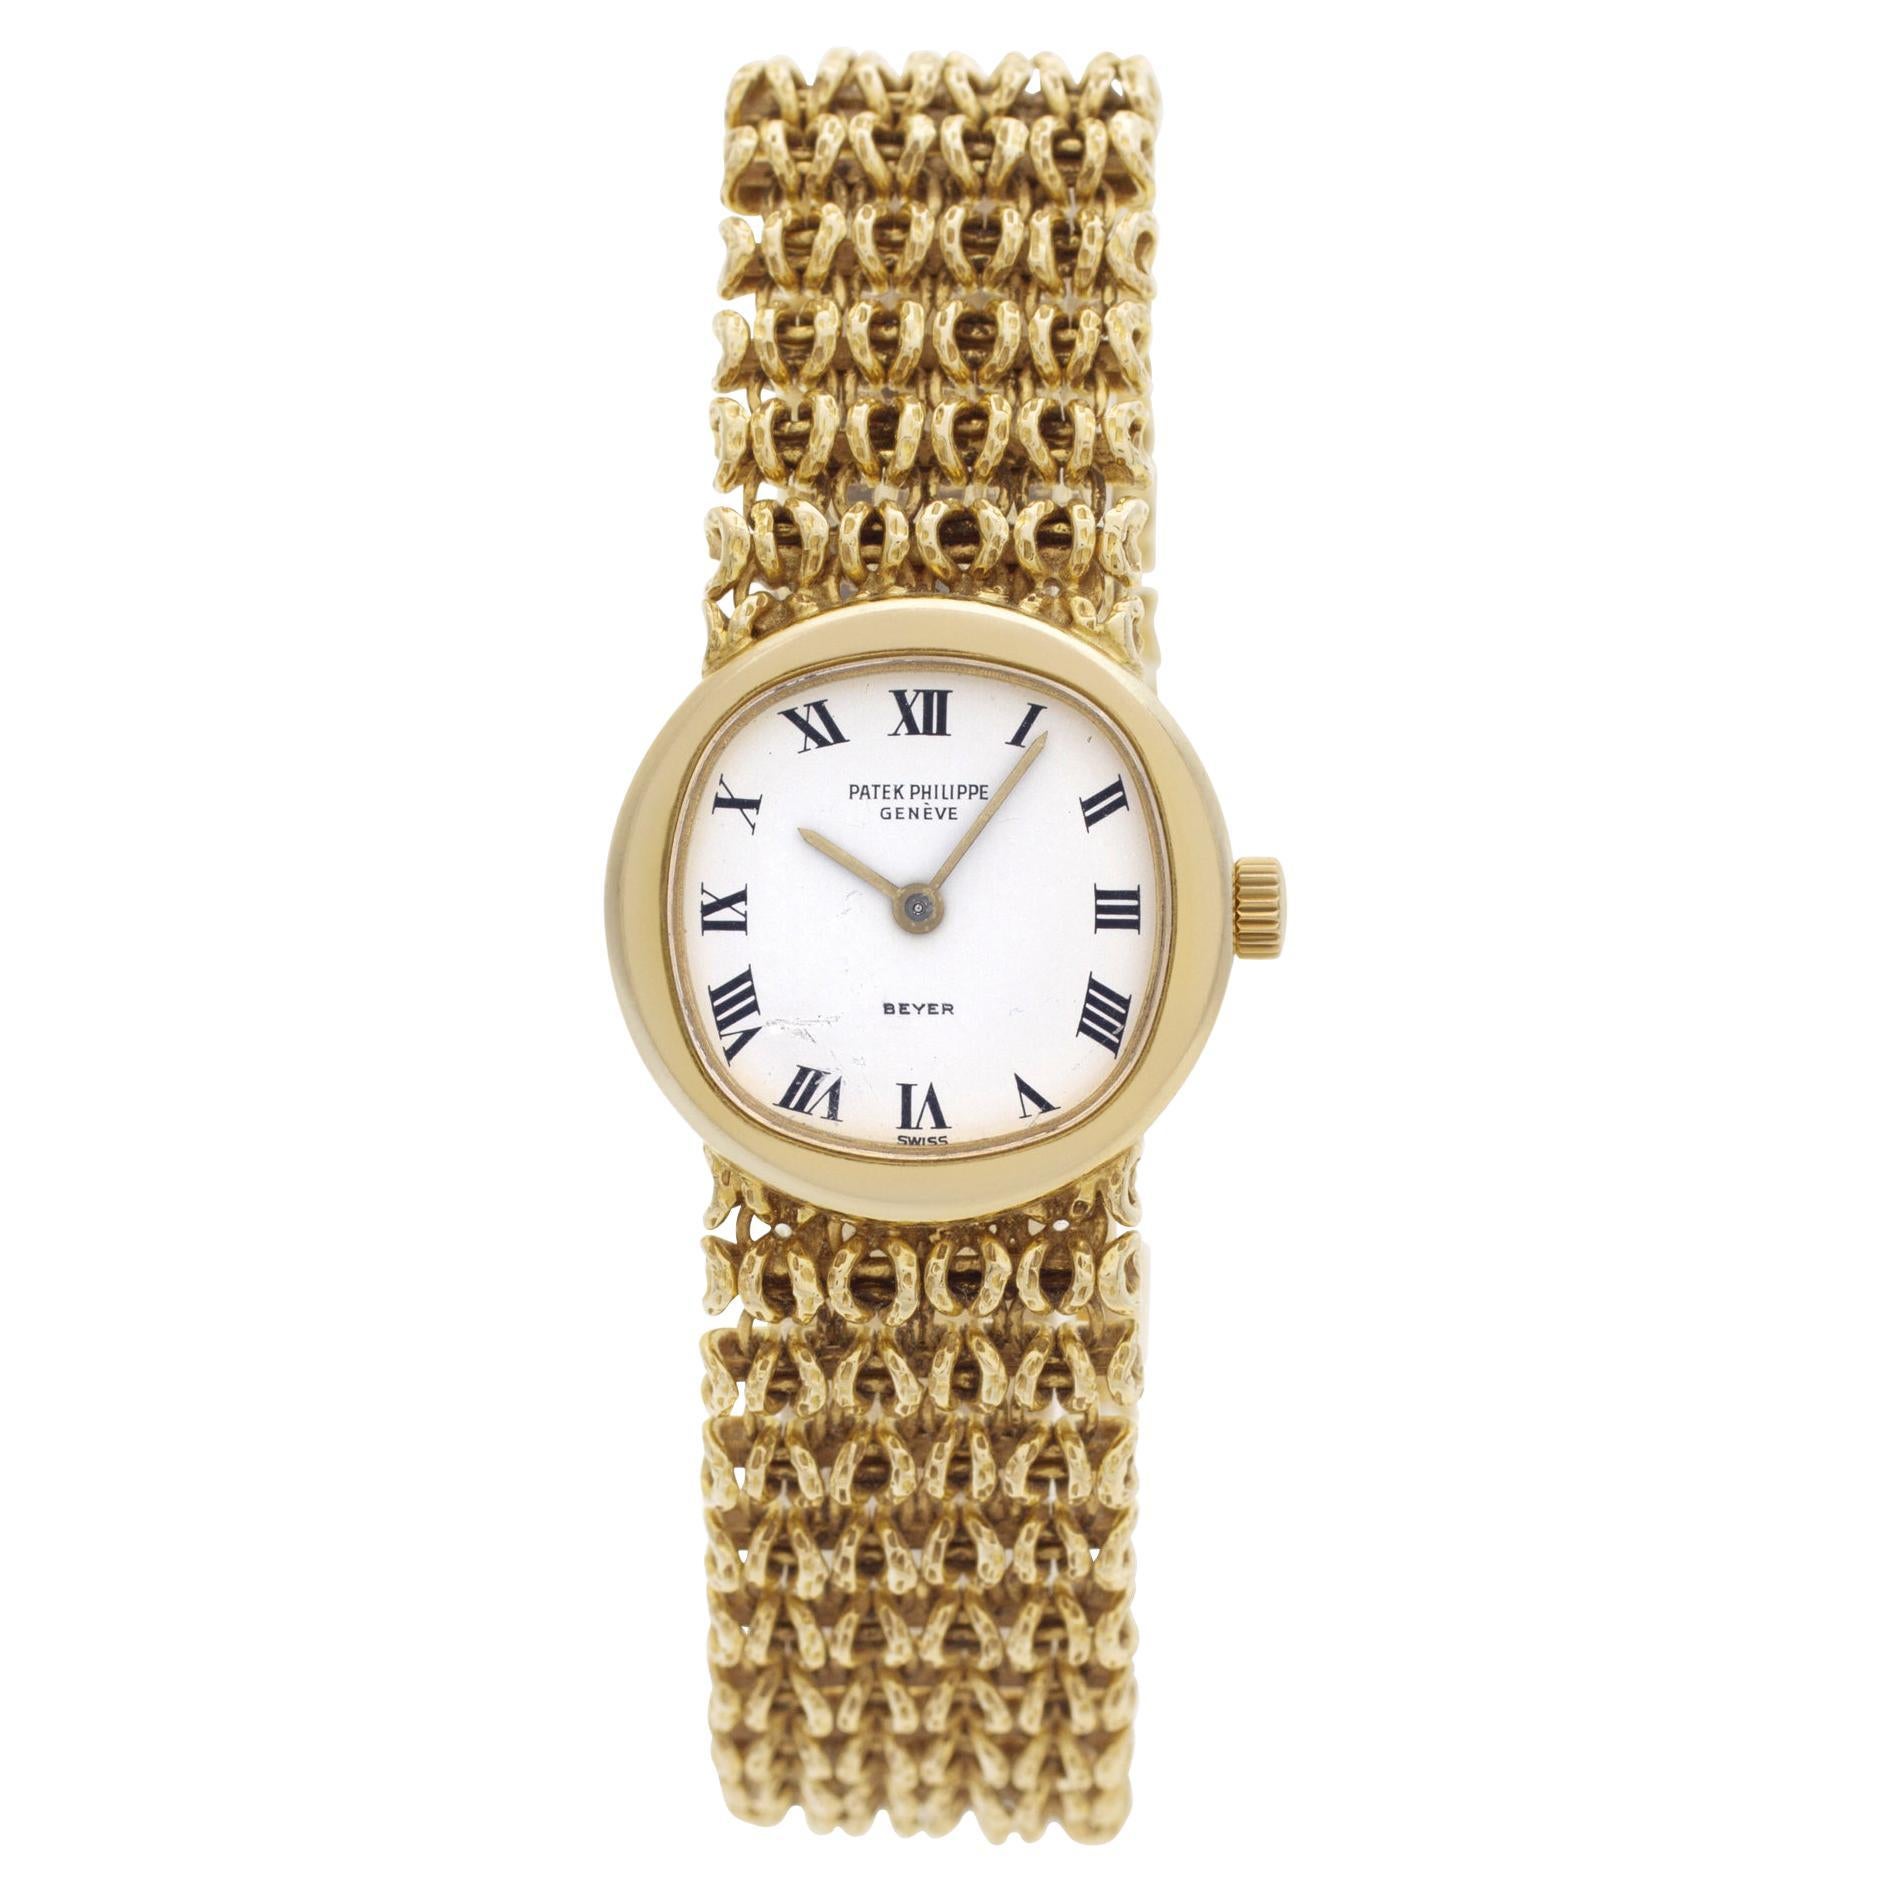 Patek Philippe Ellipse in 18k Yellow Gold Watch Retailed by Beyer